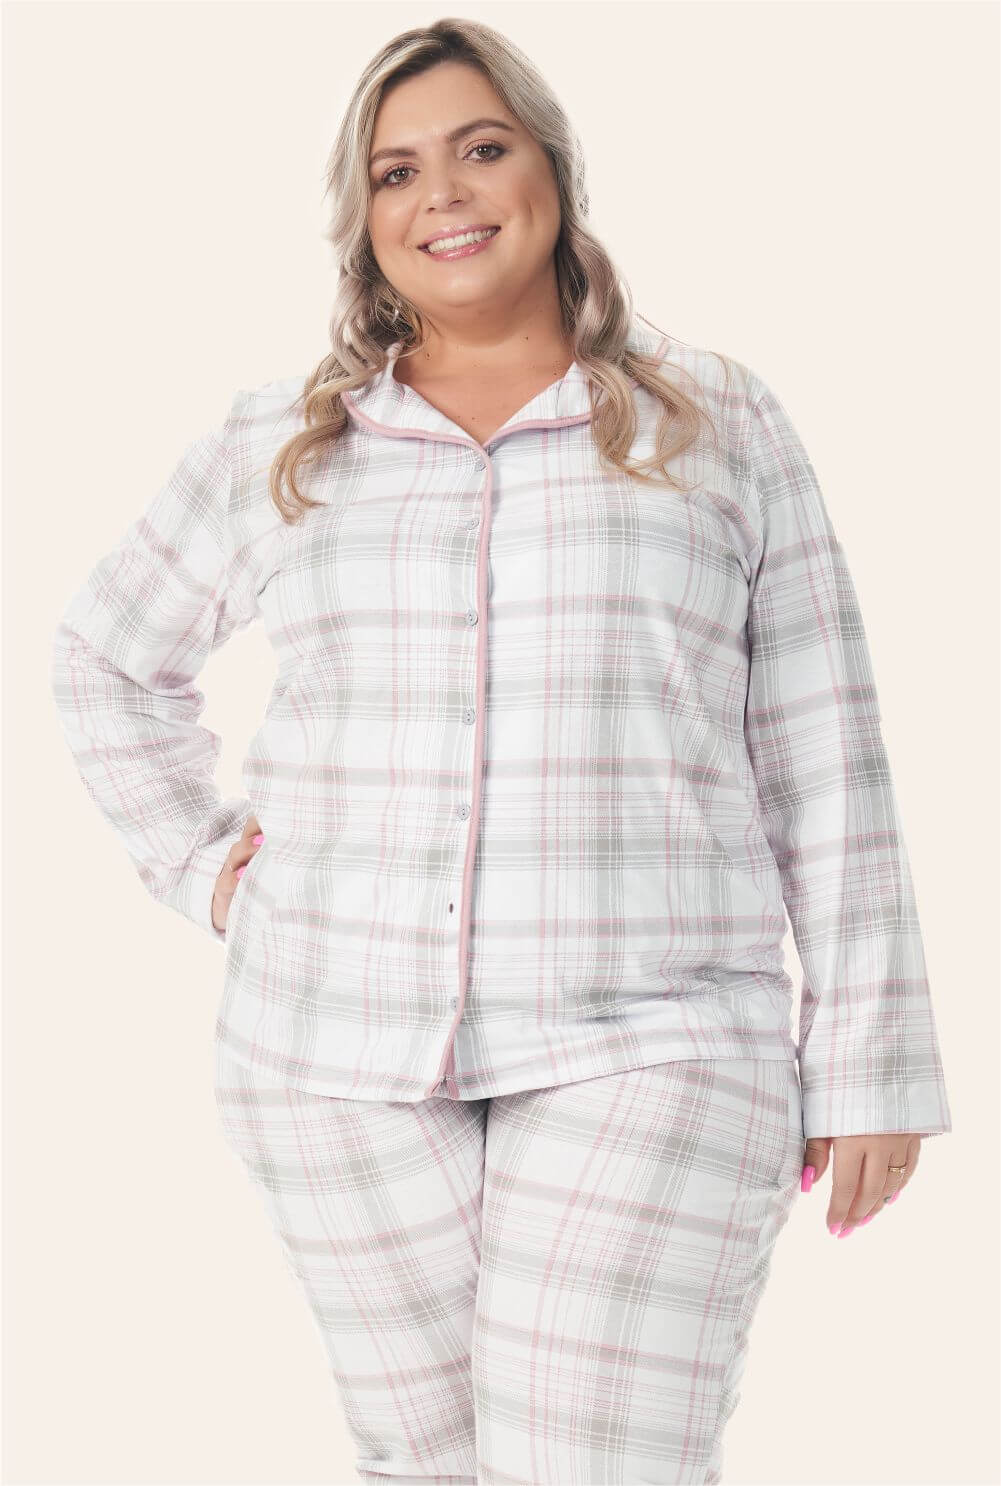 064/D - Pijama Americano Adulto Feminino Plus Size Rosa Xadrez - Bela Notte